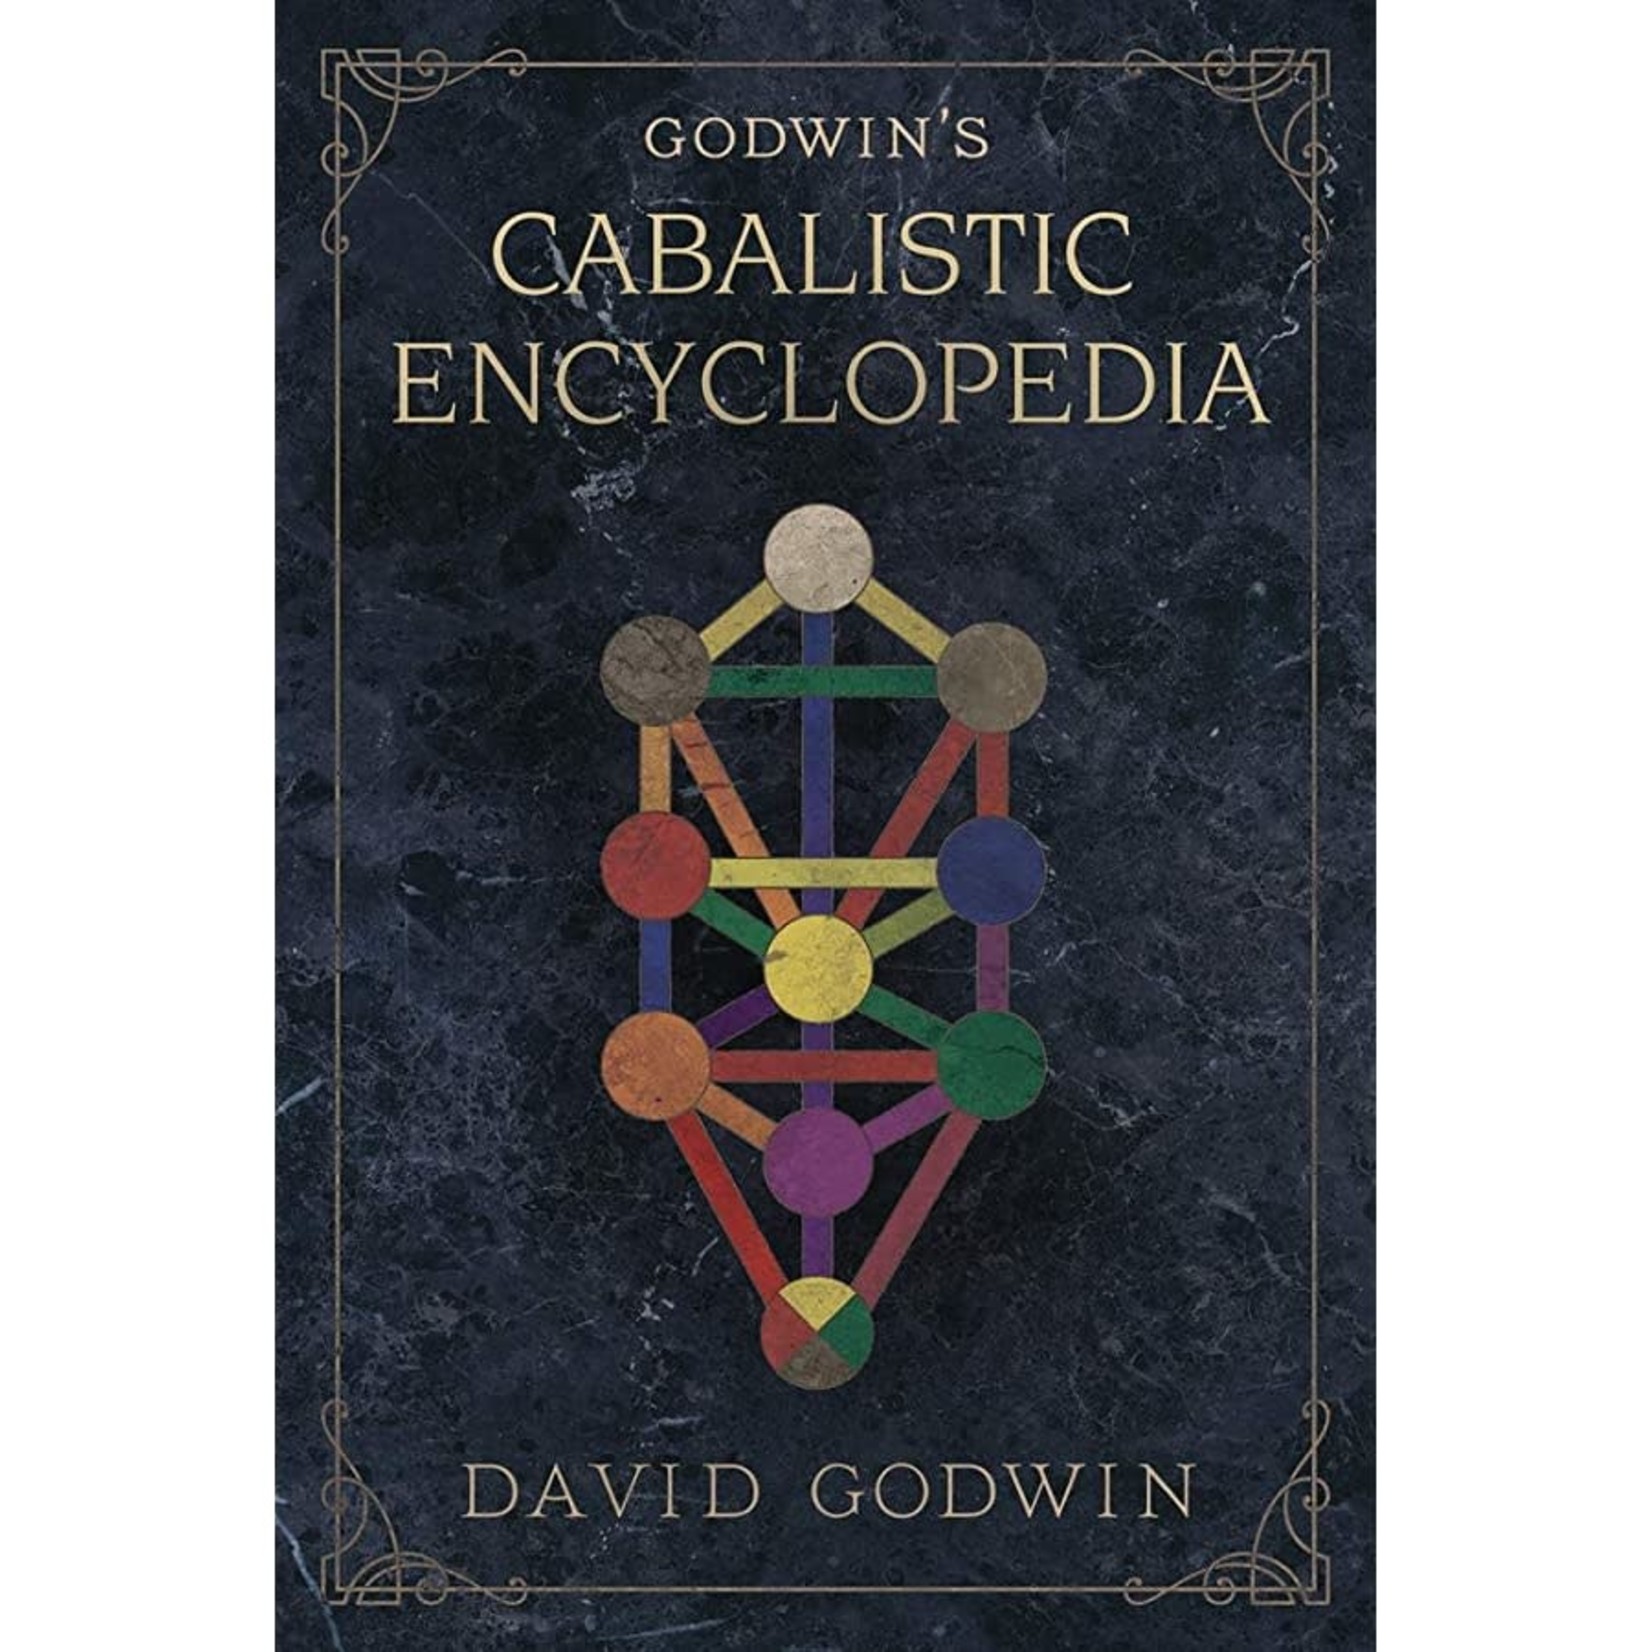 Cabalistic Encyclopedia by David Godwin